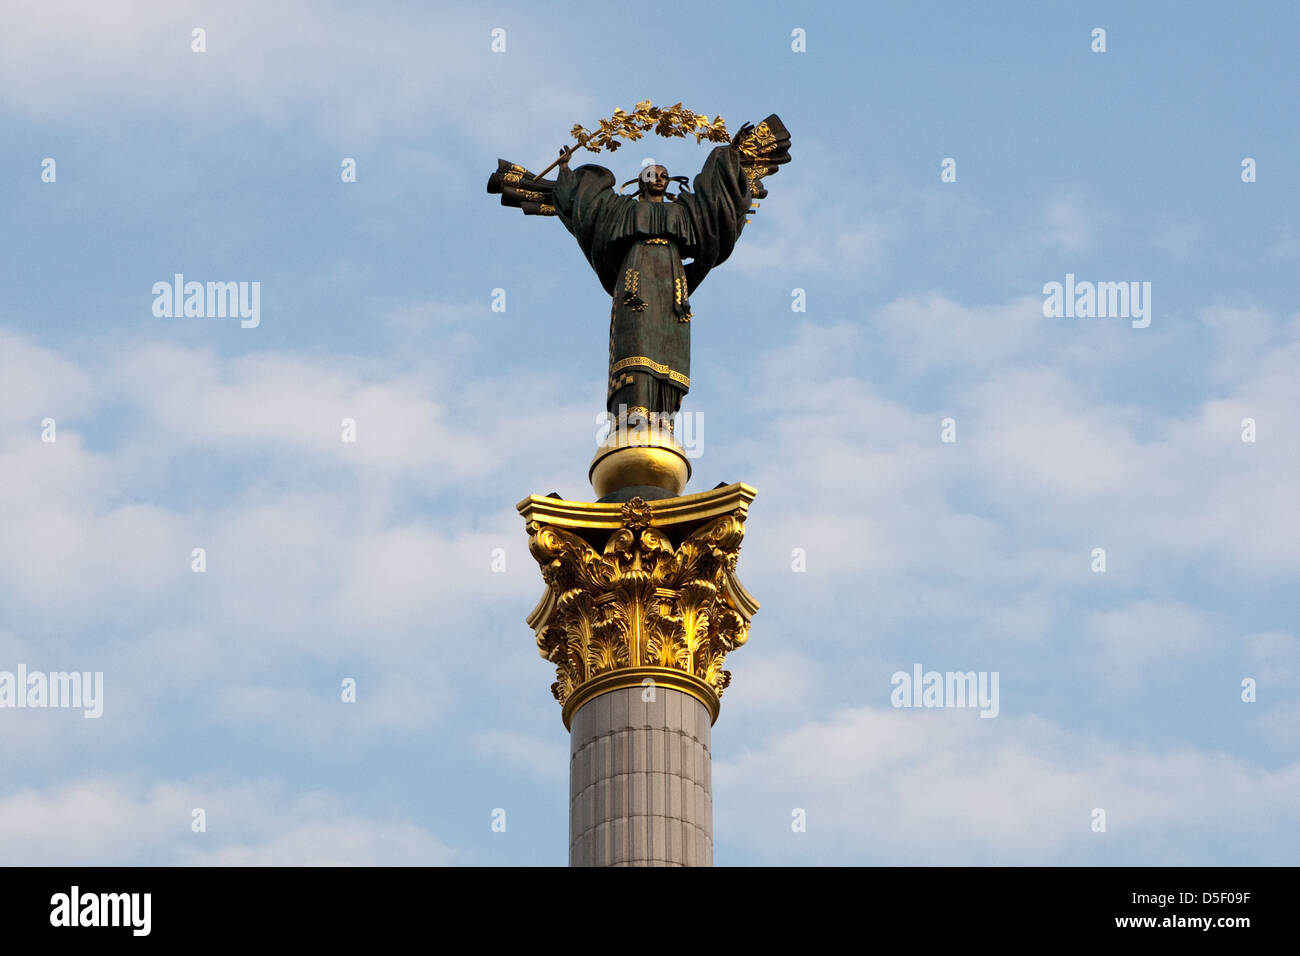 Independence Monument figurine of a woman (Berehynia), Maidan Nezalezhnosti, Independence Square, Kiev, Ukraine Stock Photo